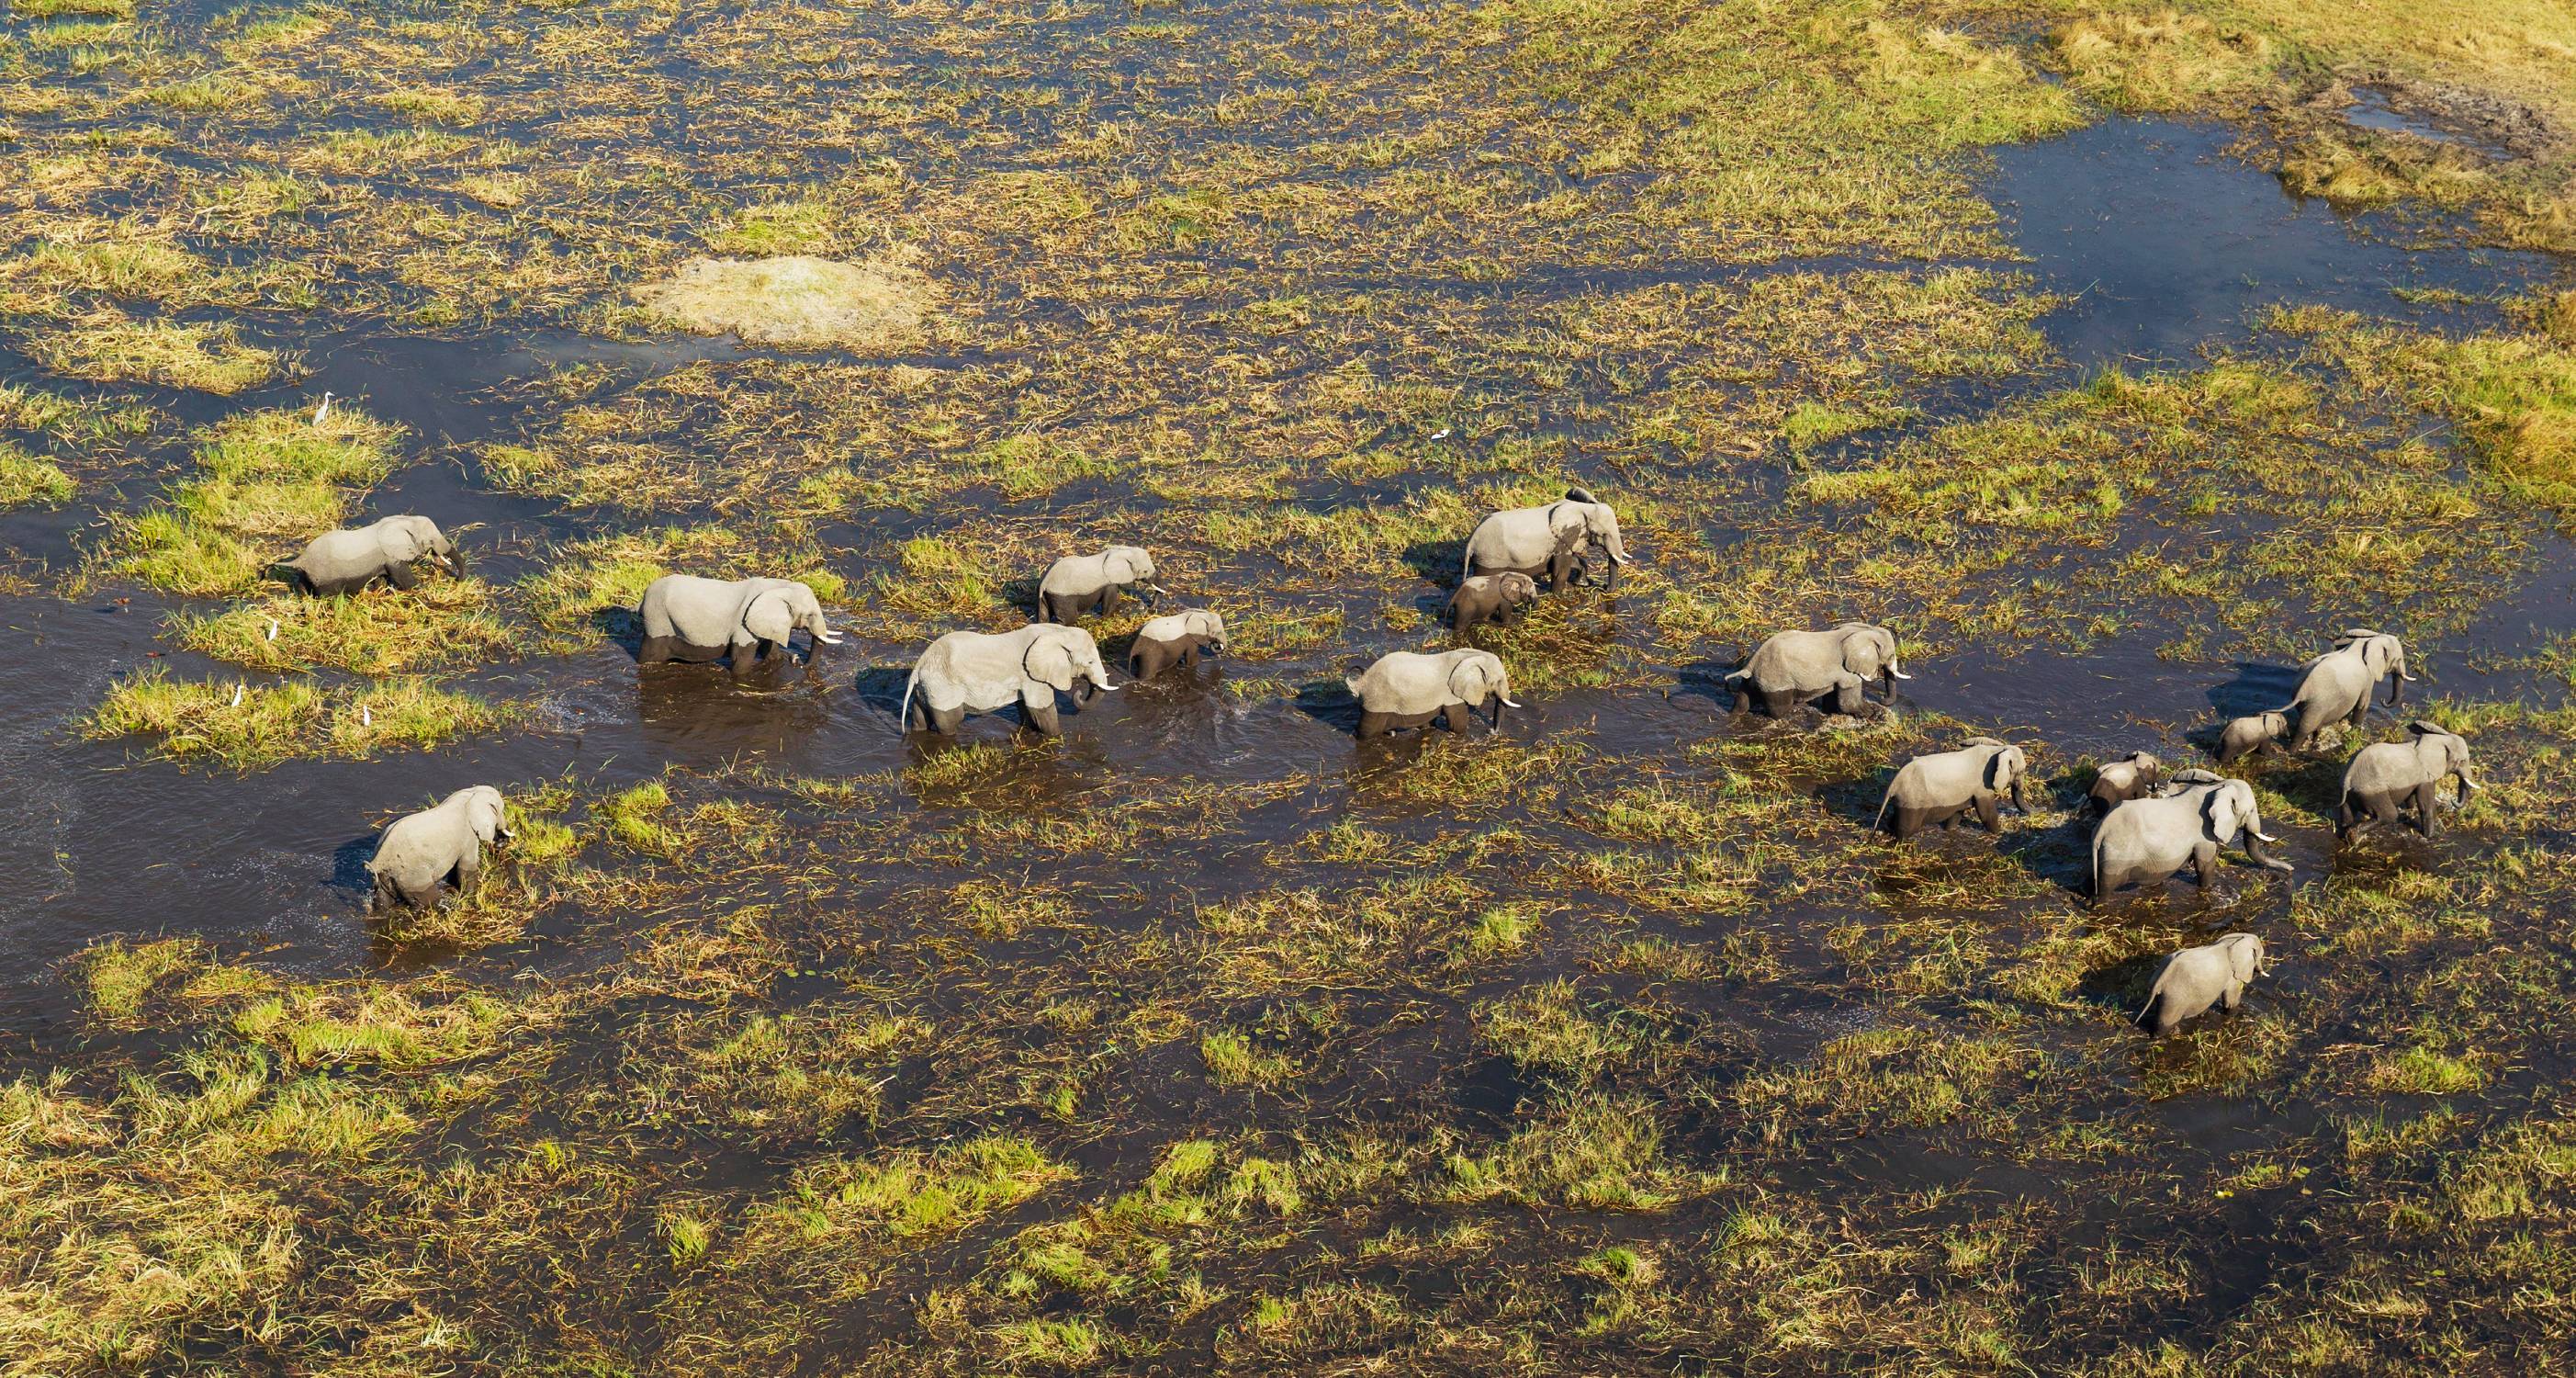 African Elephants (Loxodonta africana), breeding herd, roaming in a freshwater marsh, Okavango Delta, Botswana, Africa.